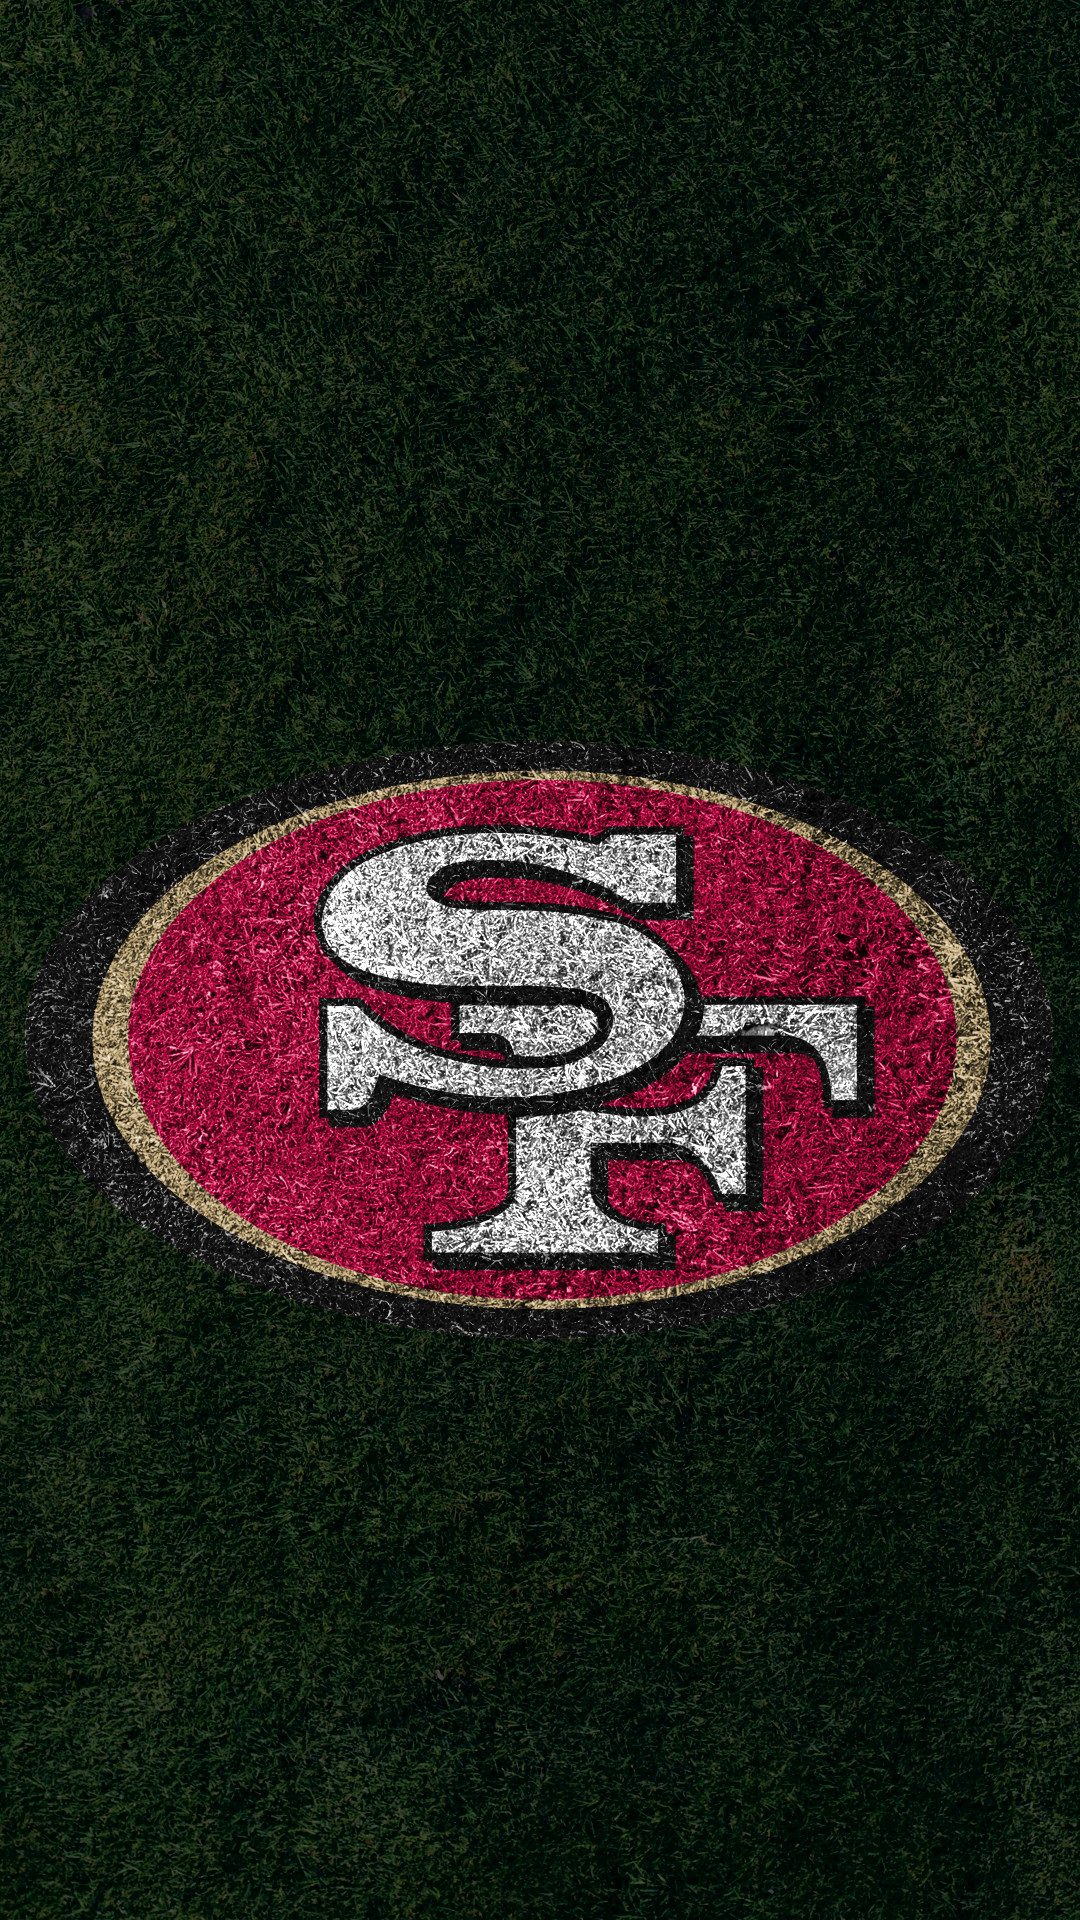 1080x1920 ... San Francisco 49ers 2017 turf logo wallpaper free iphone 5, 6, 7, galaxy